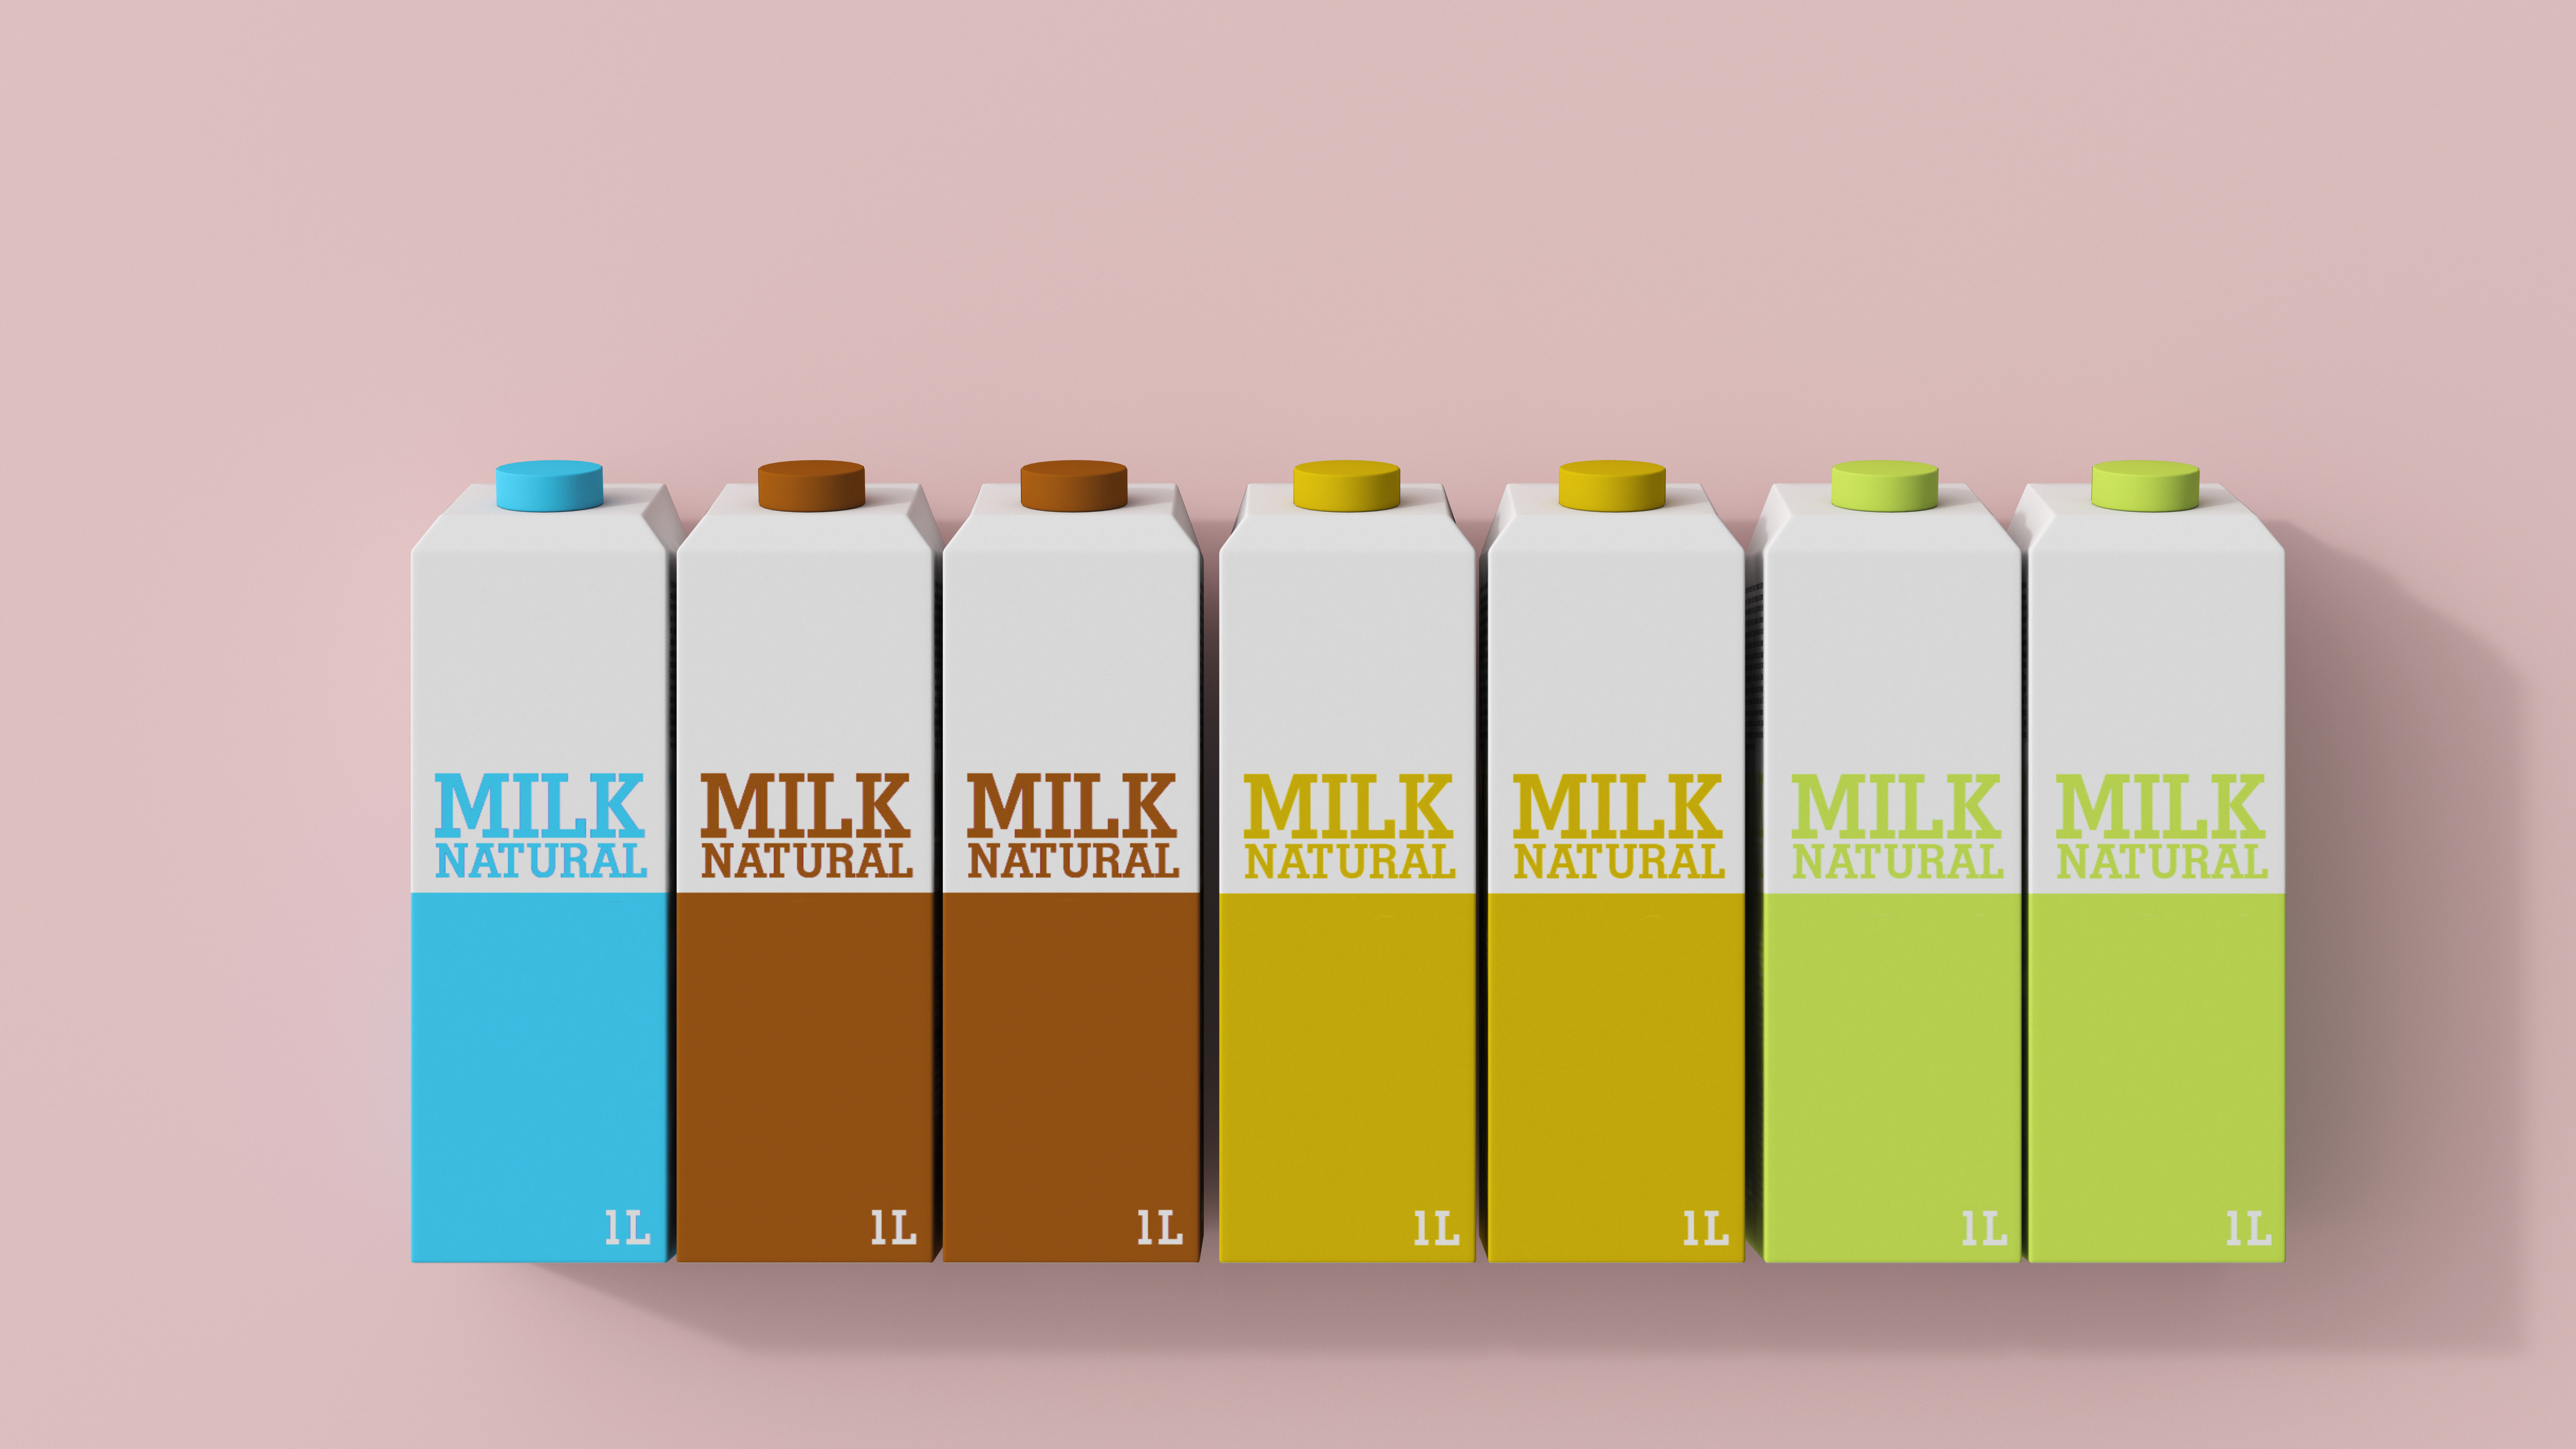 3D rendering, Row of milk cartons in different colors